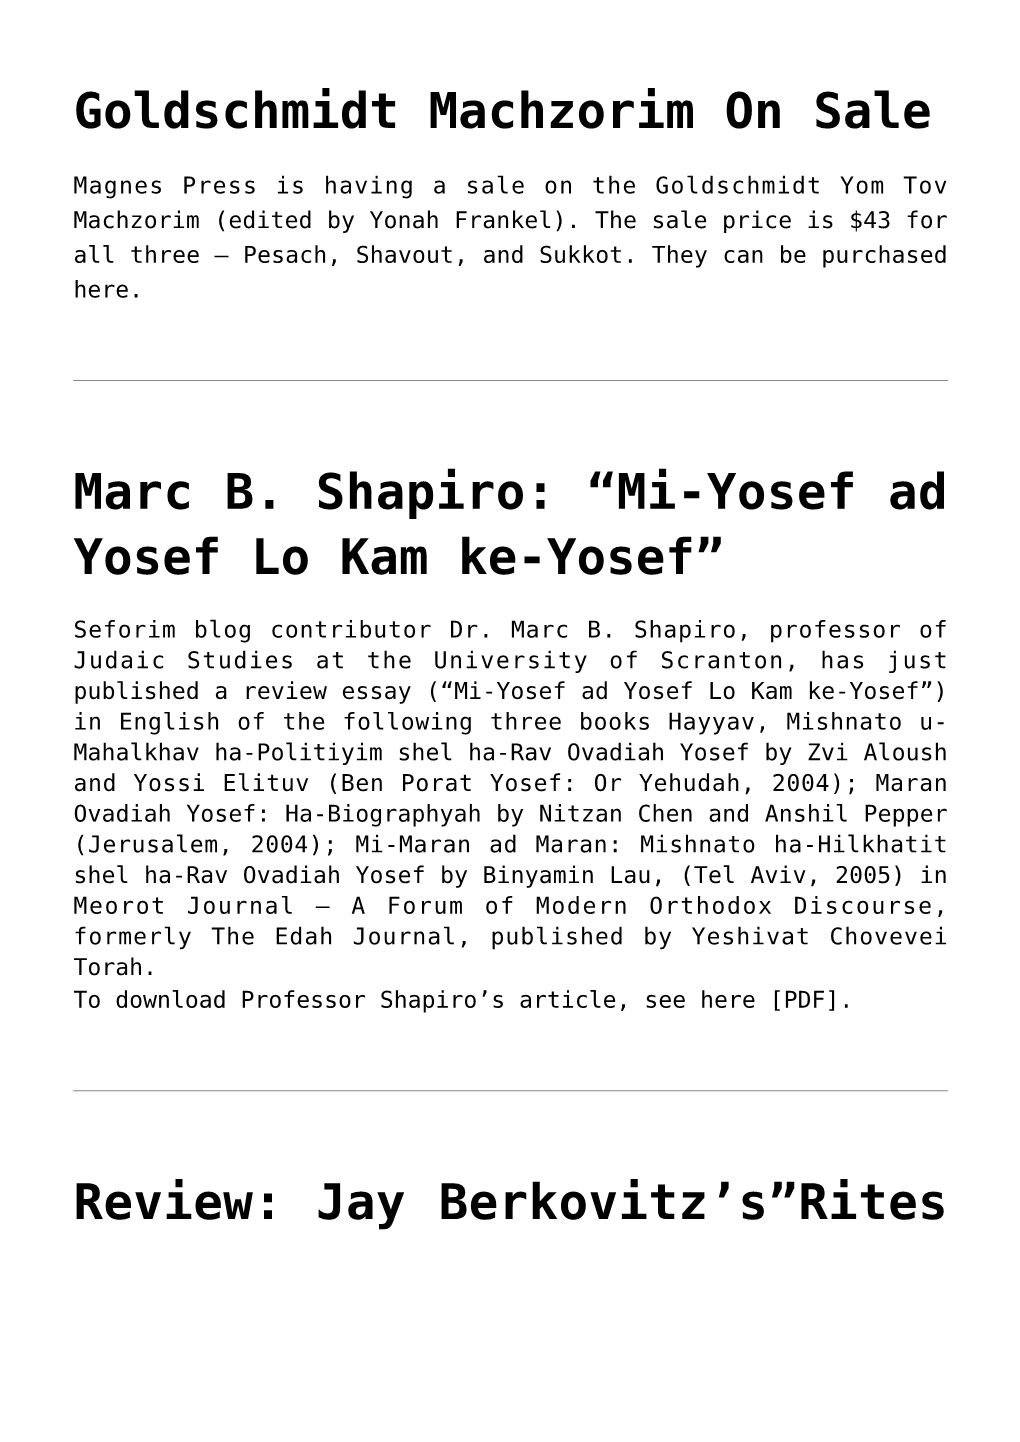 Goldschmidt Machzorim on Sale,Marc B. Shapiro: &#8220;Mi-Yosef Ad Yosef Lo Kam Ke-Yosef&#8221